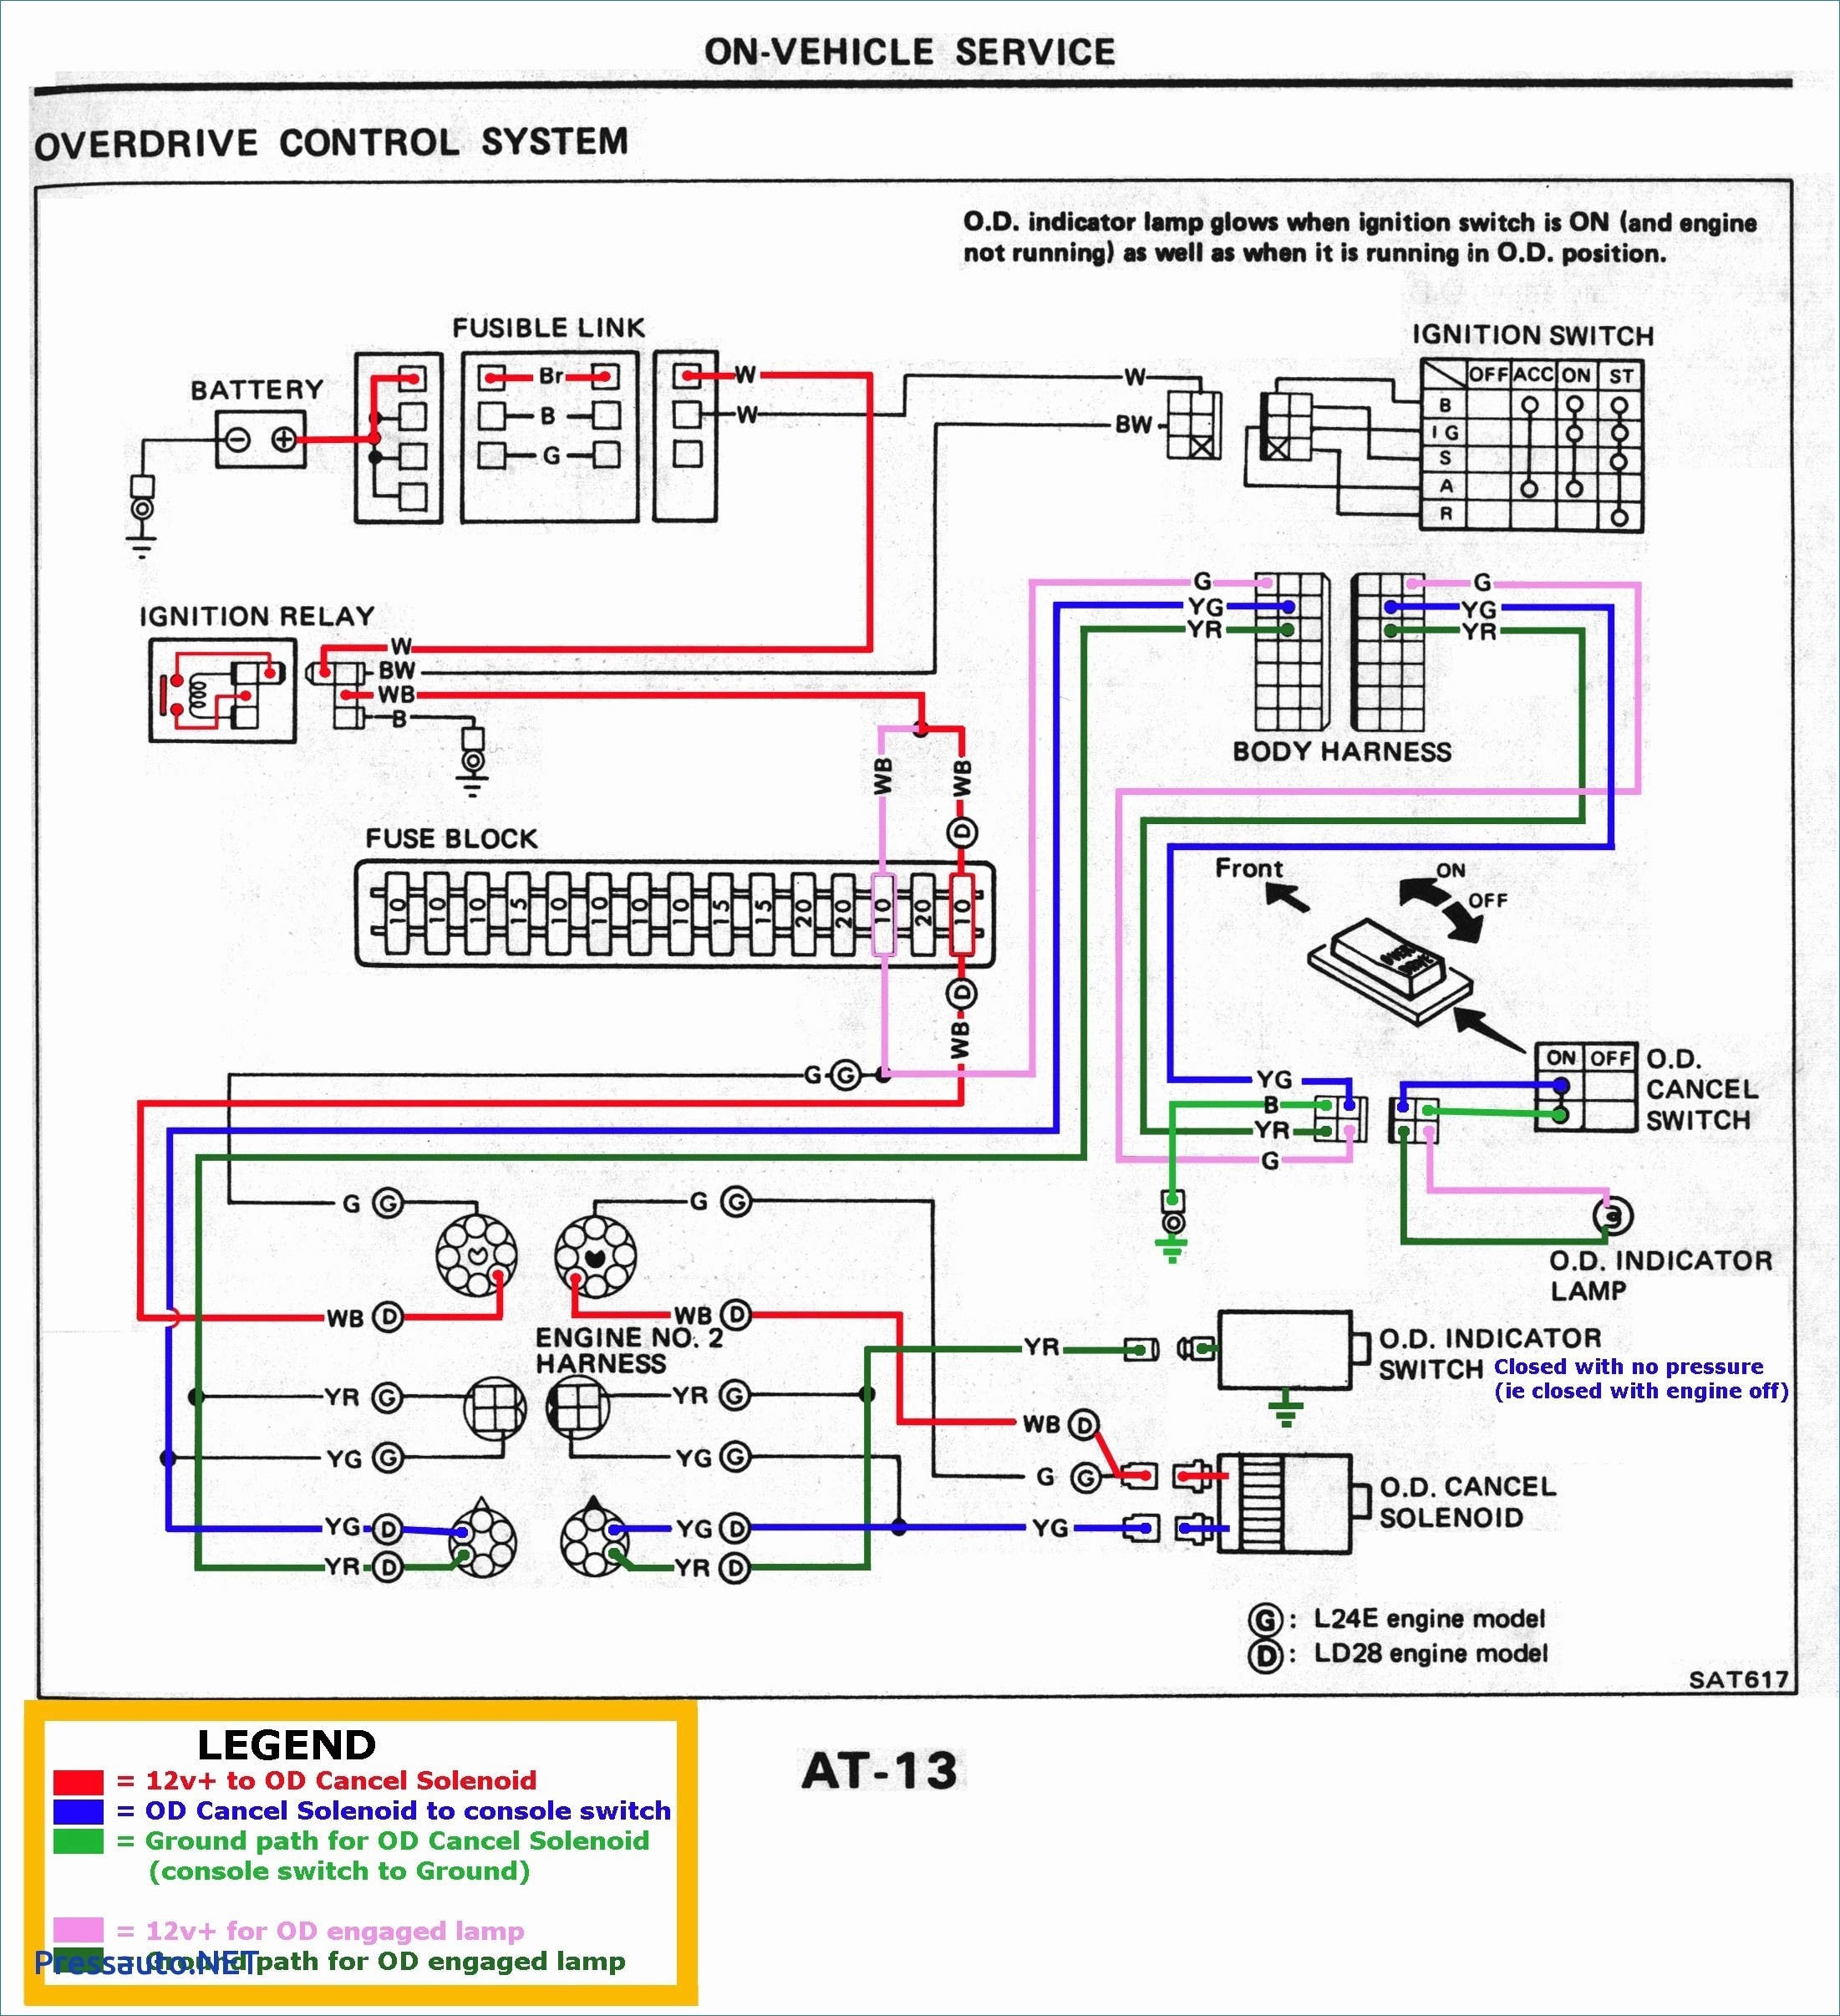 Car Alternator Diagram John Deere Tractor Radio Wiring Diagram Collection Of Car Alternator Diagram